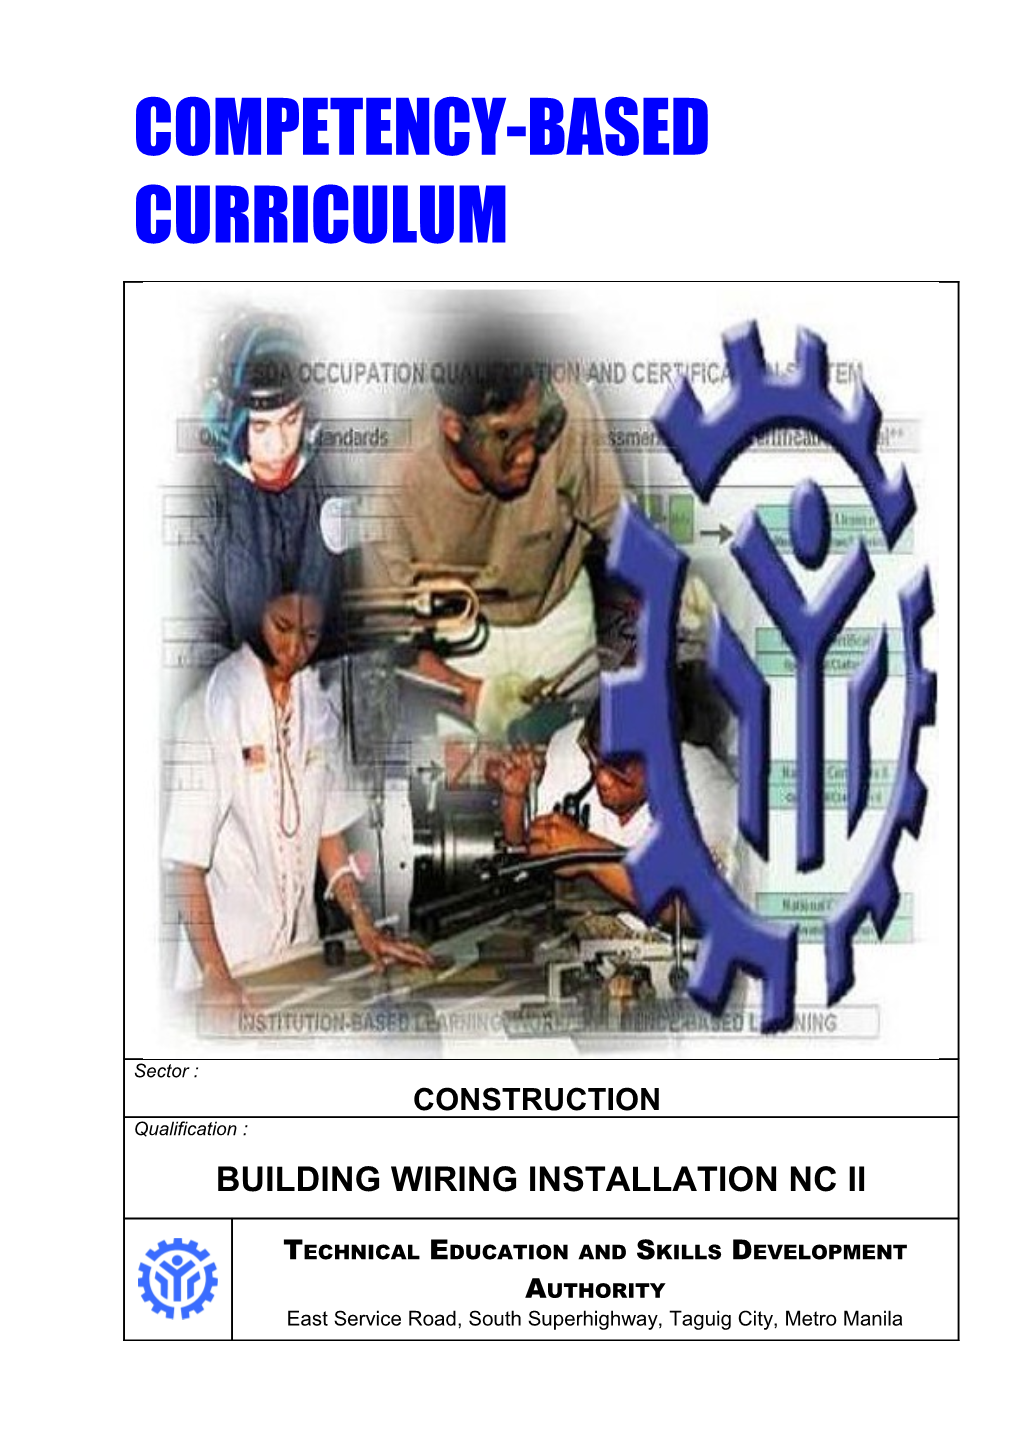 Building Wiring Installation NC II